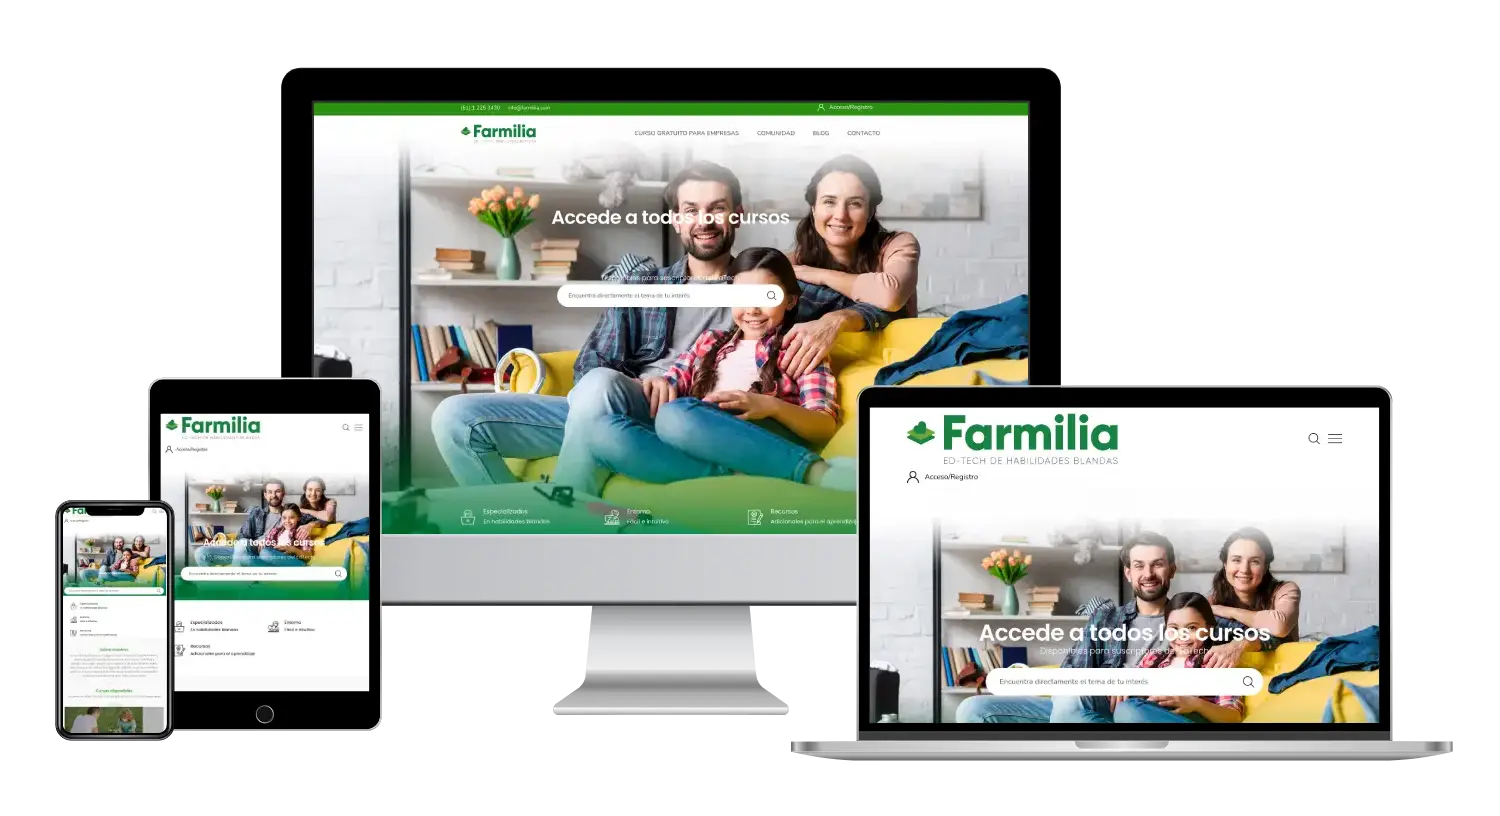 Farmilia.com - relationship development online portal